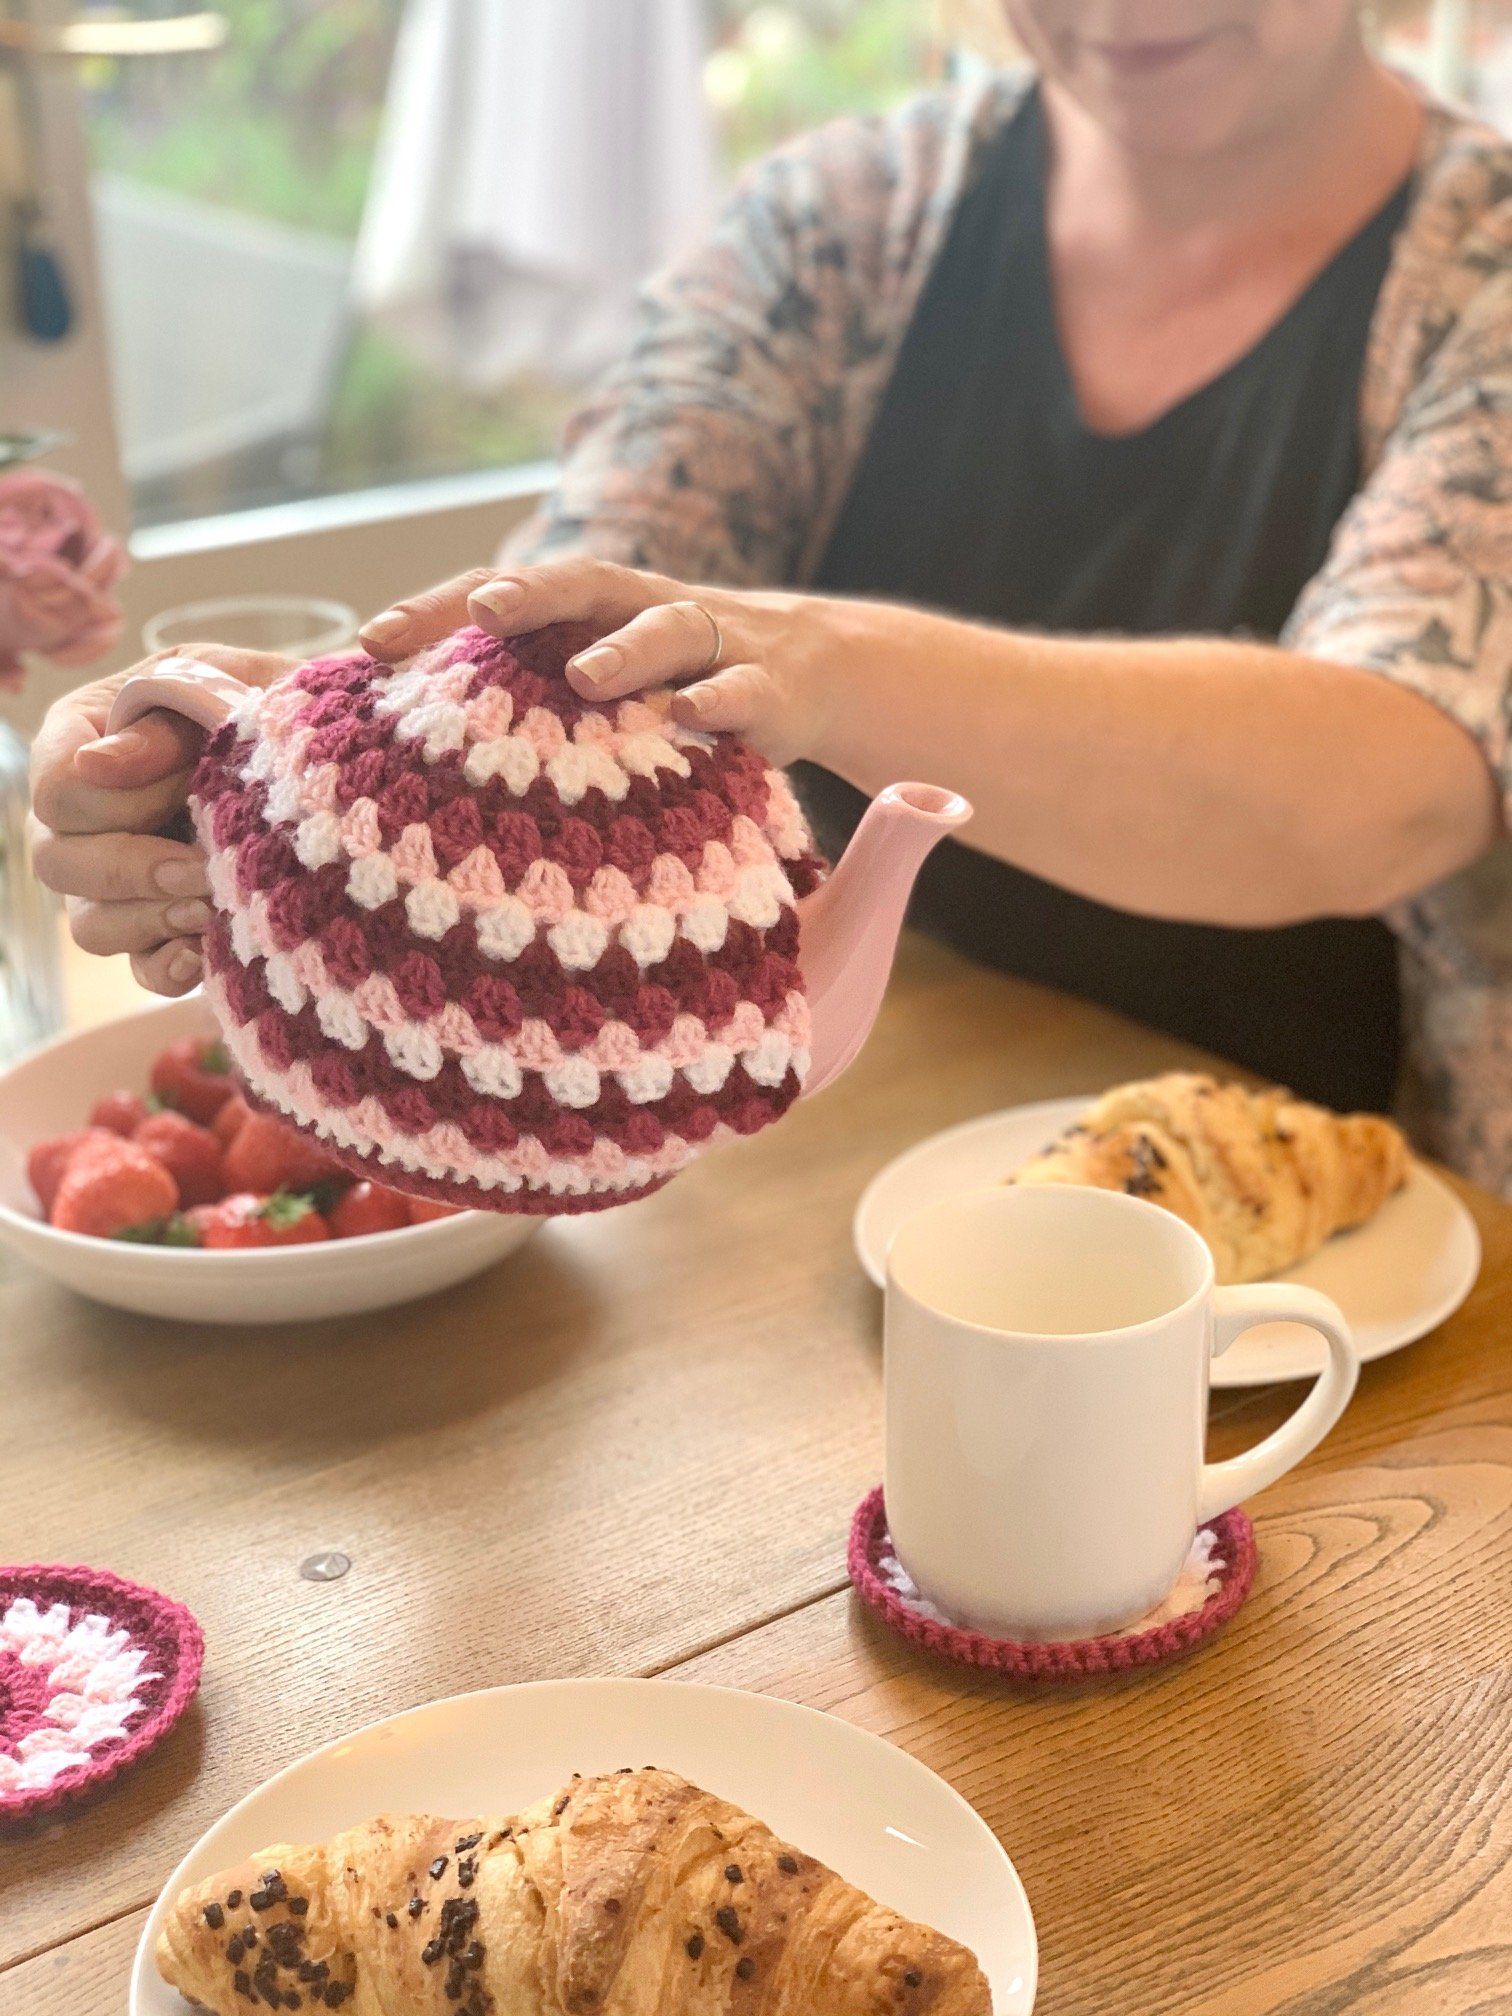 Crochet Teapot Cosy